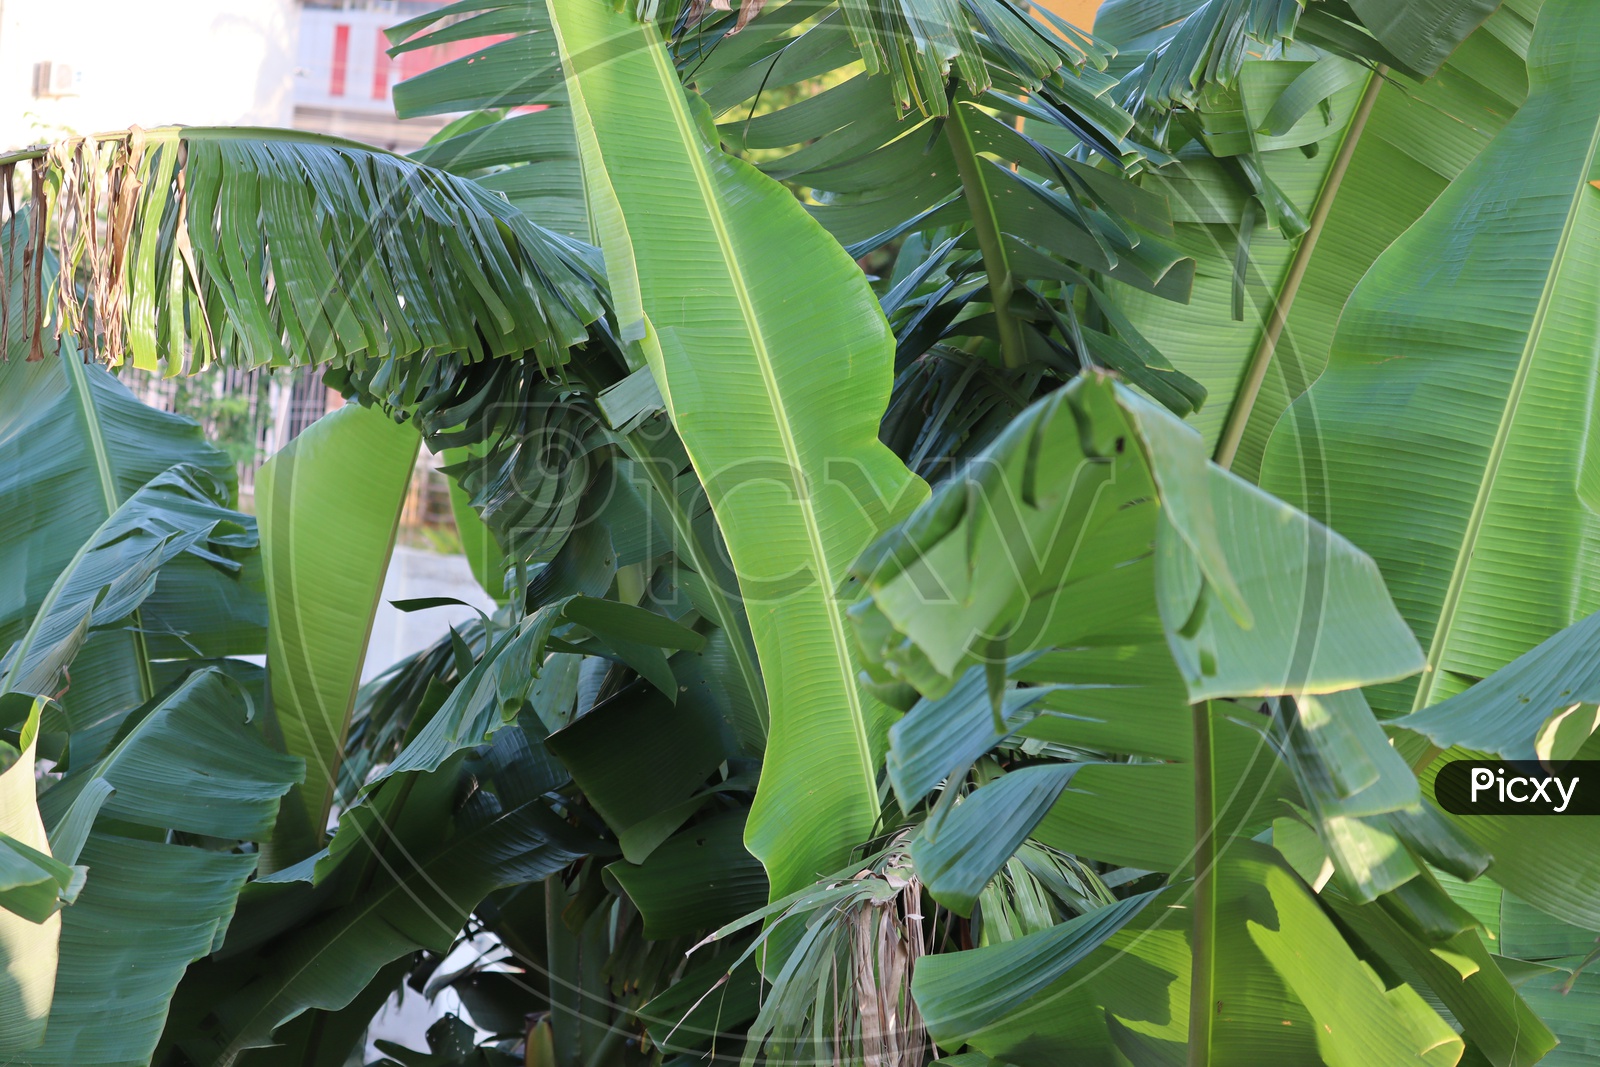 Banana Green leaf image and background